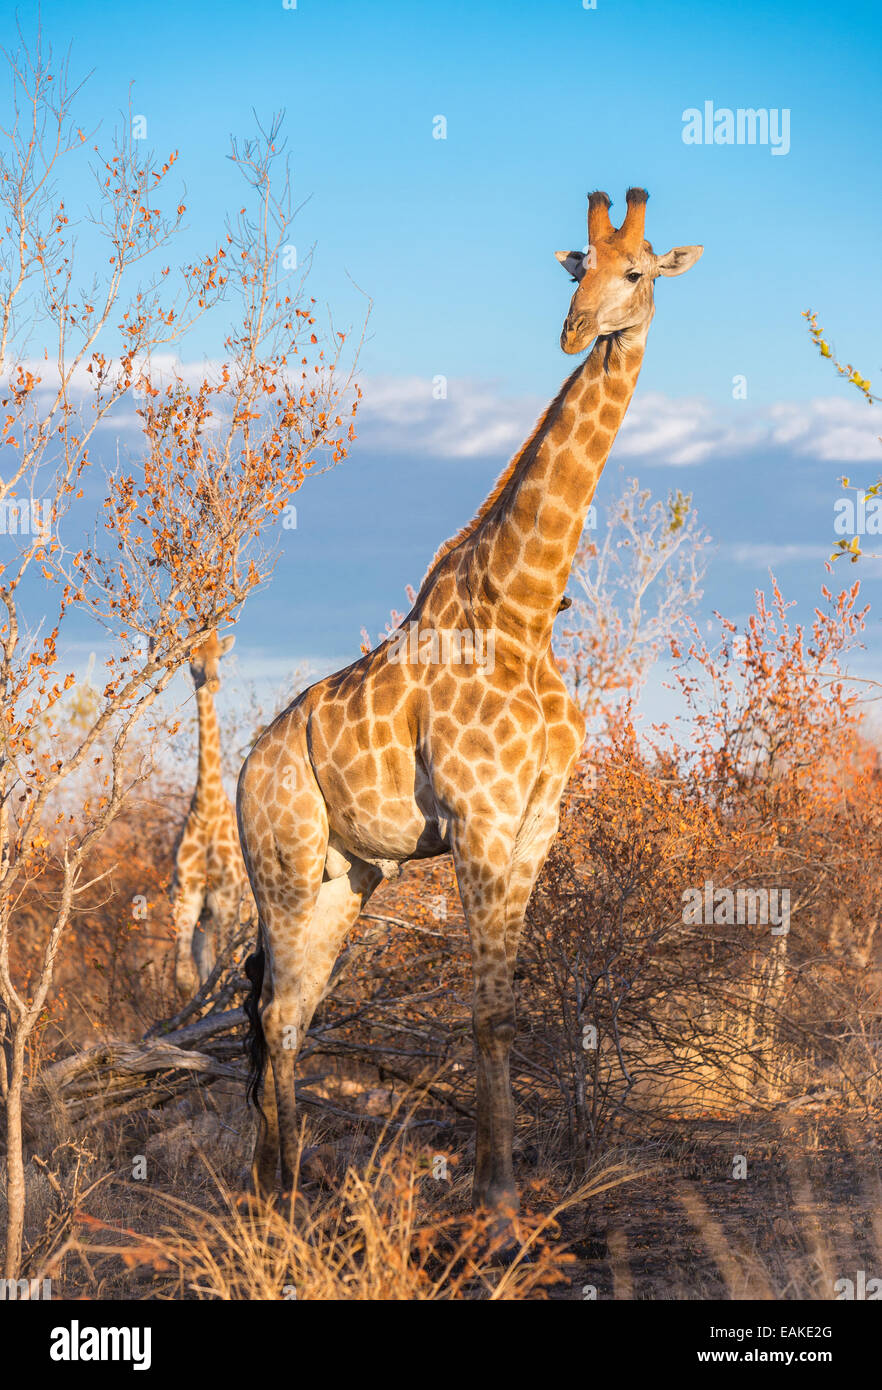 KRUGER NATIONAL PARK, SOUTH AFRICA - Giraffe Stock Photo